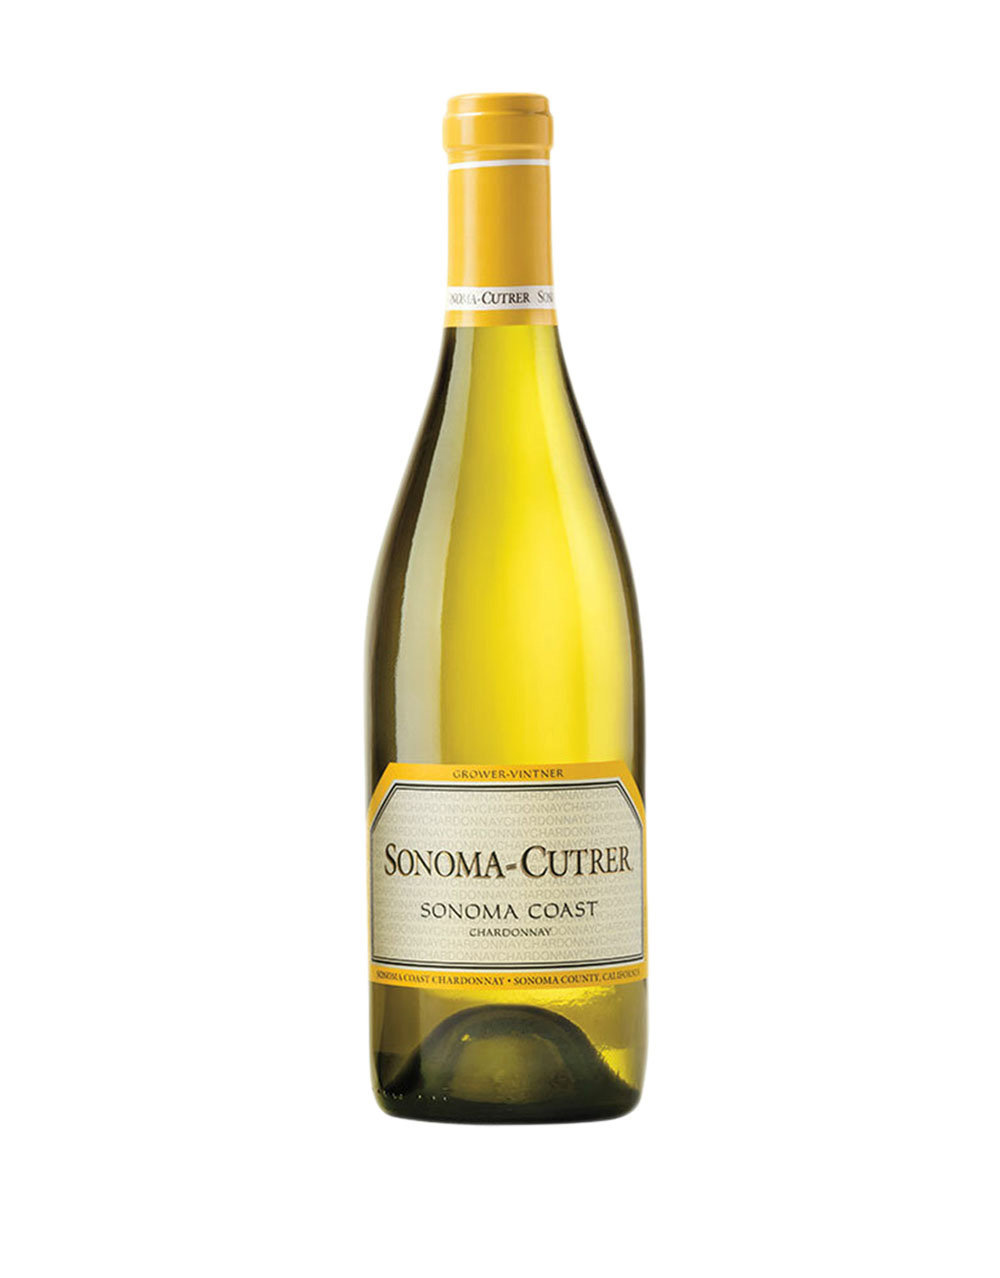 Sonoma Cutrer Chardonnay 2019 Sonoma Coast